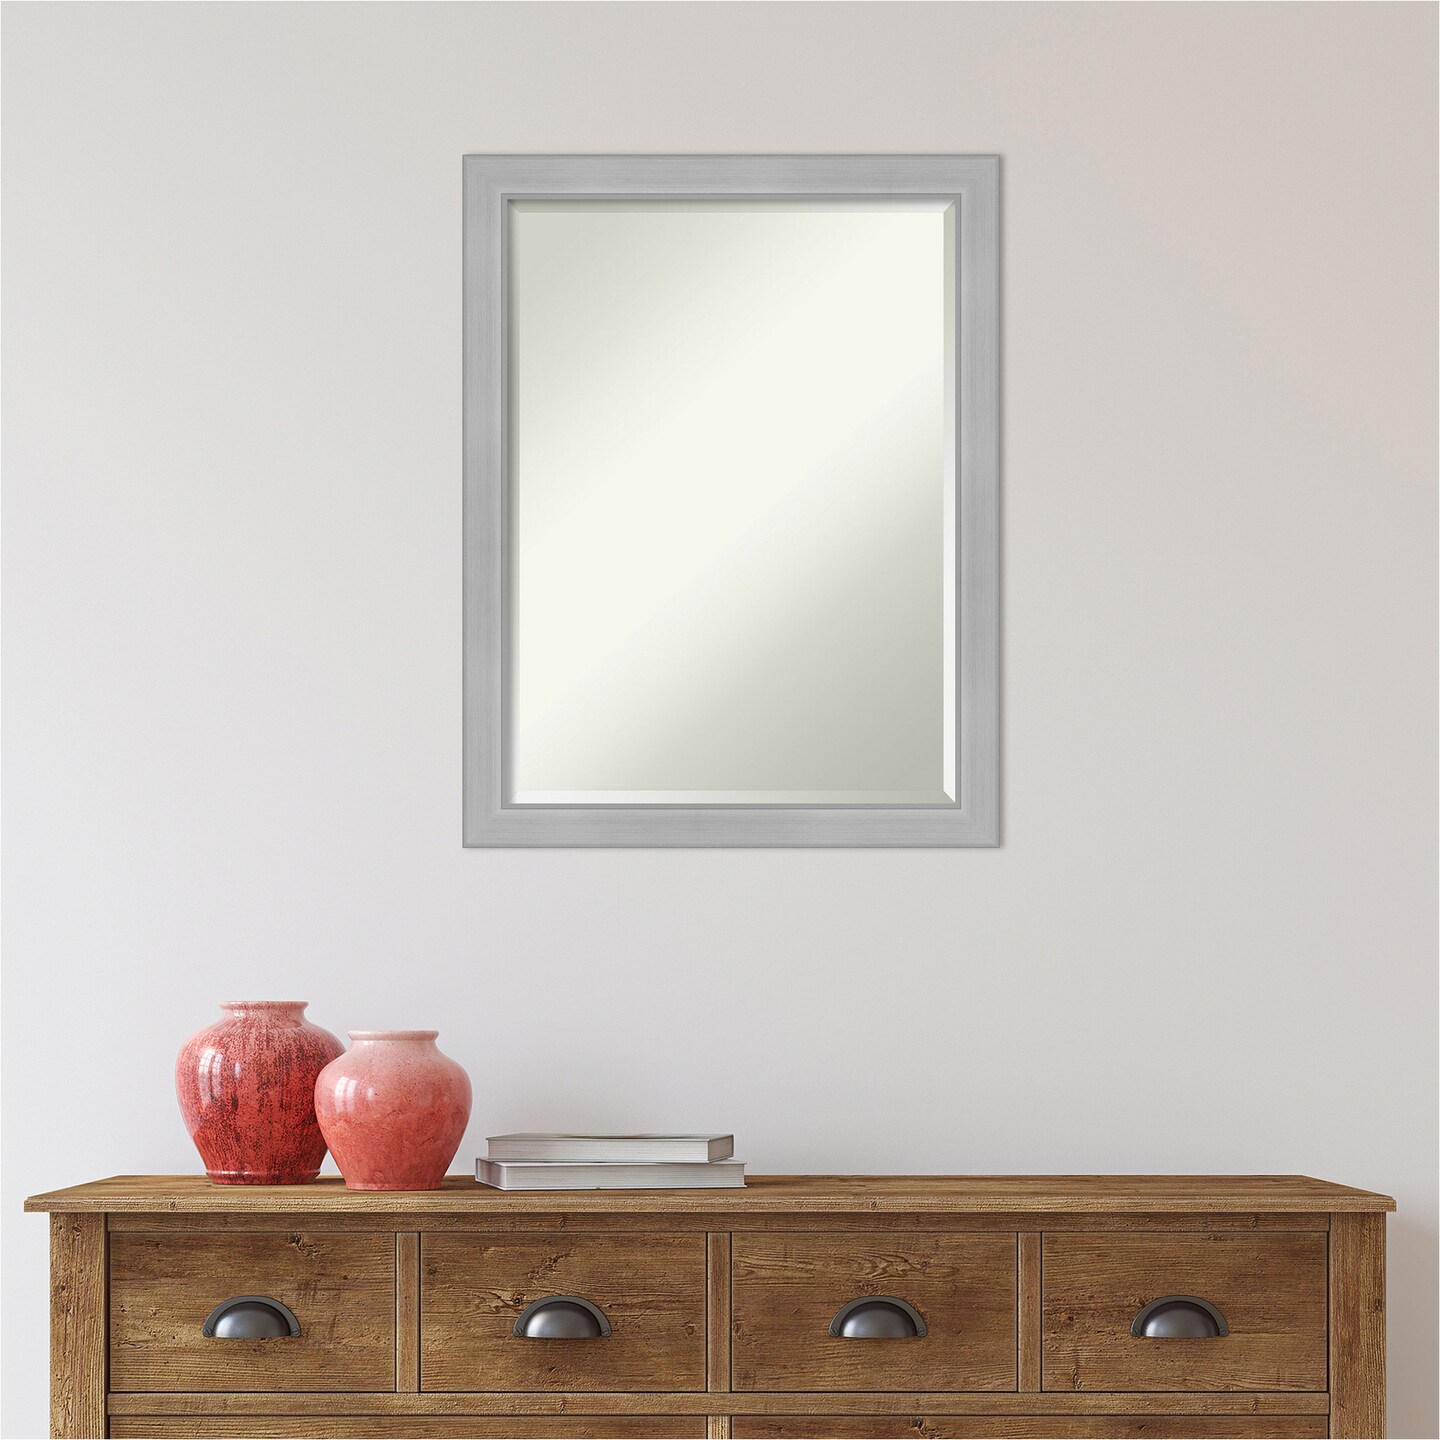 Beveled Bathroom Wall Mirror, Vista Brushed Nickel Narrow Frame